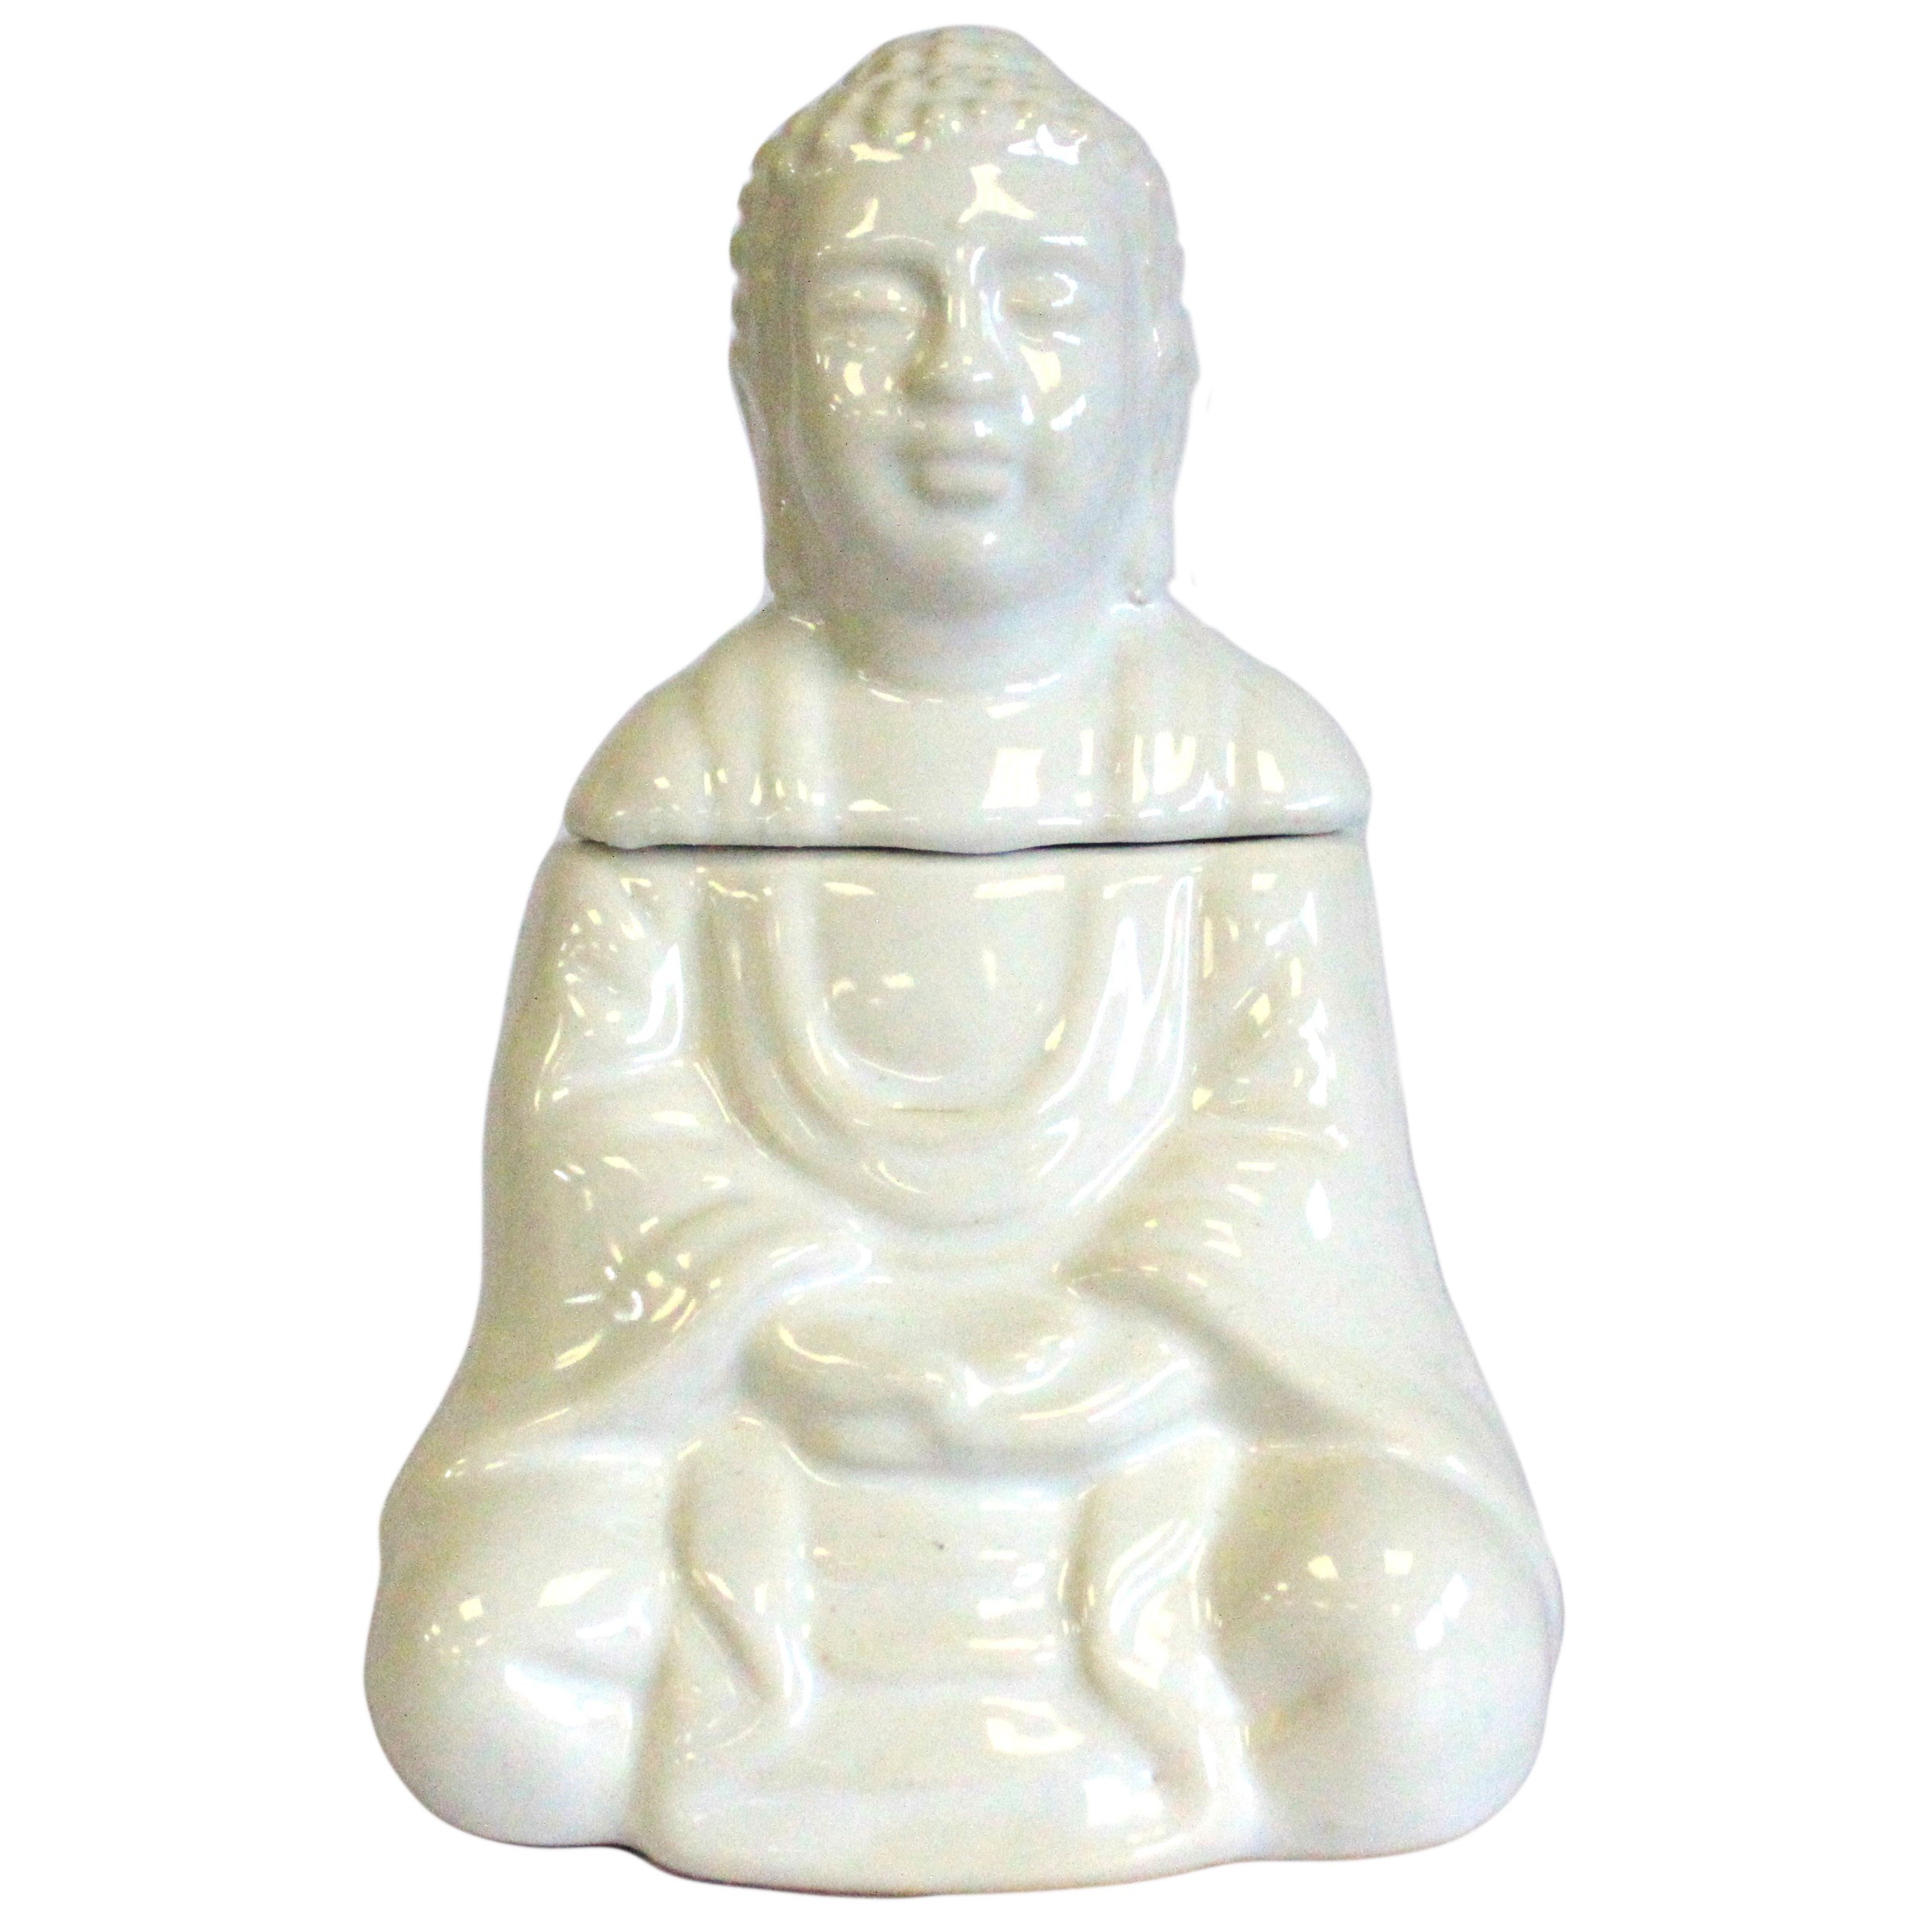 Vonná lampa Budha biela